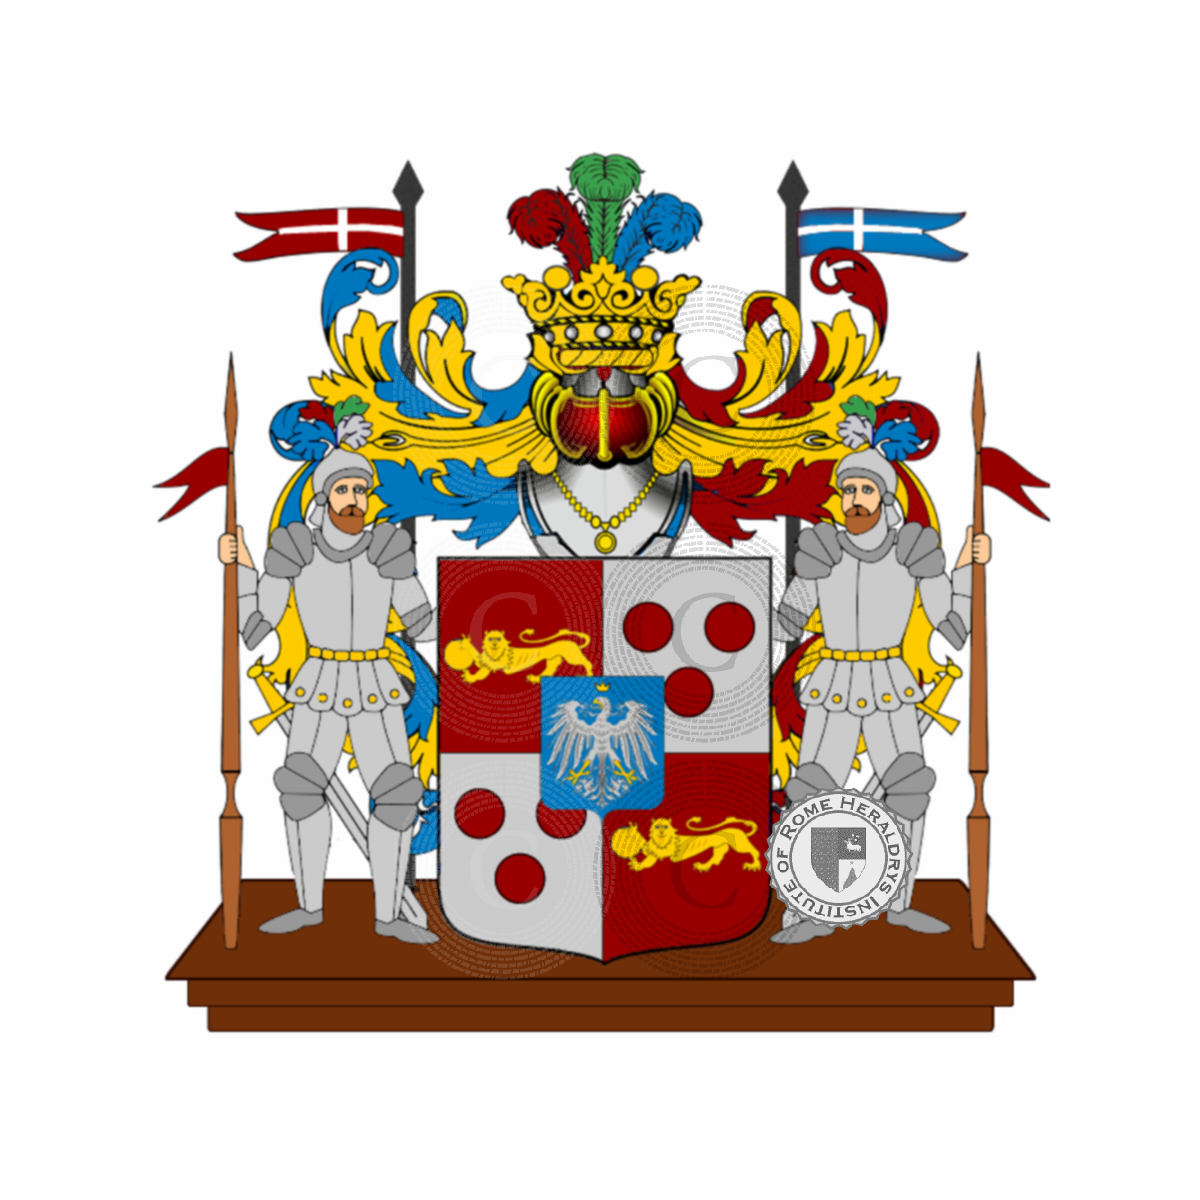 Coat of arms of familycalcagnini